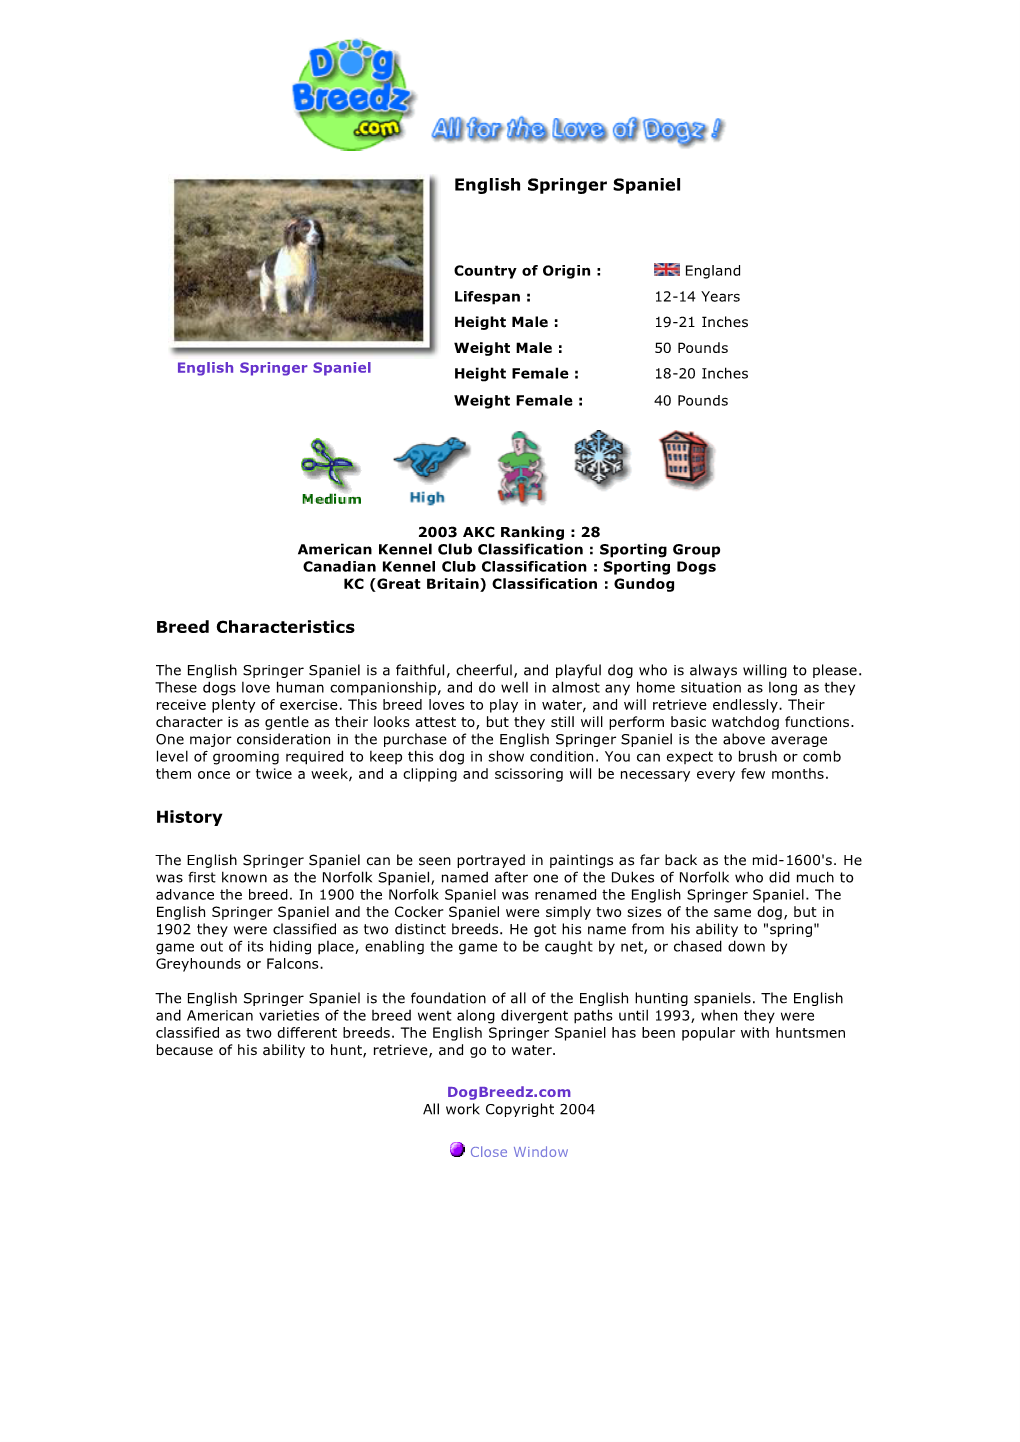 English Springer Spaniel Breed Characteristics History